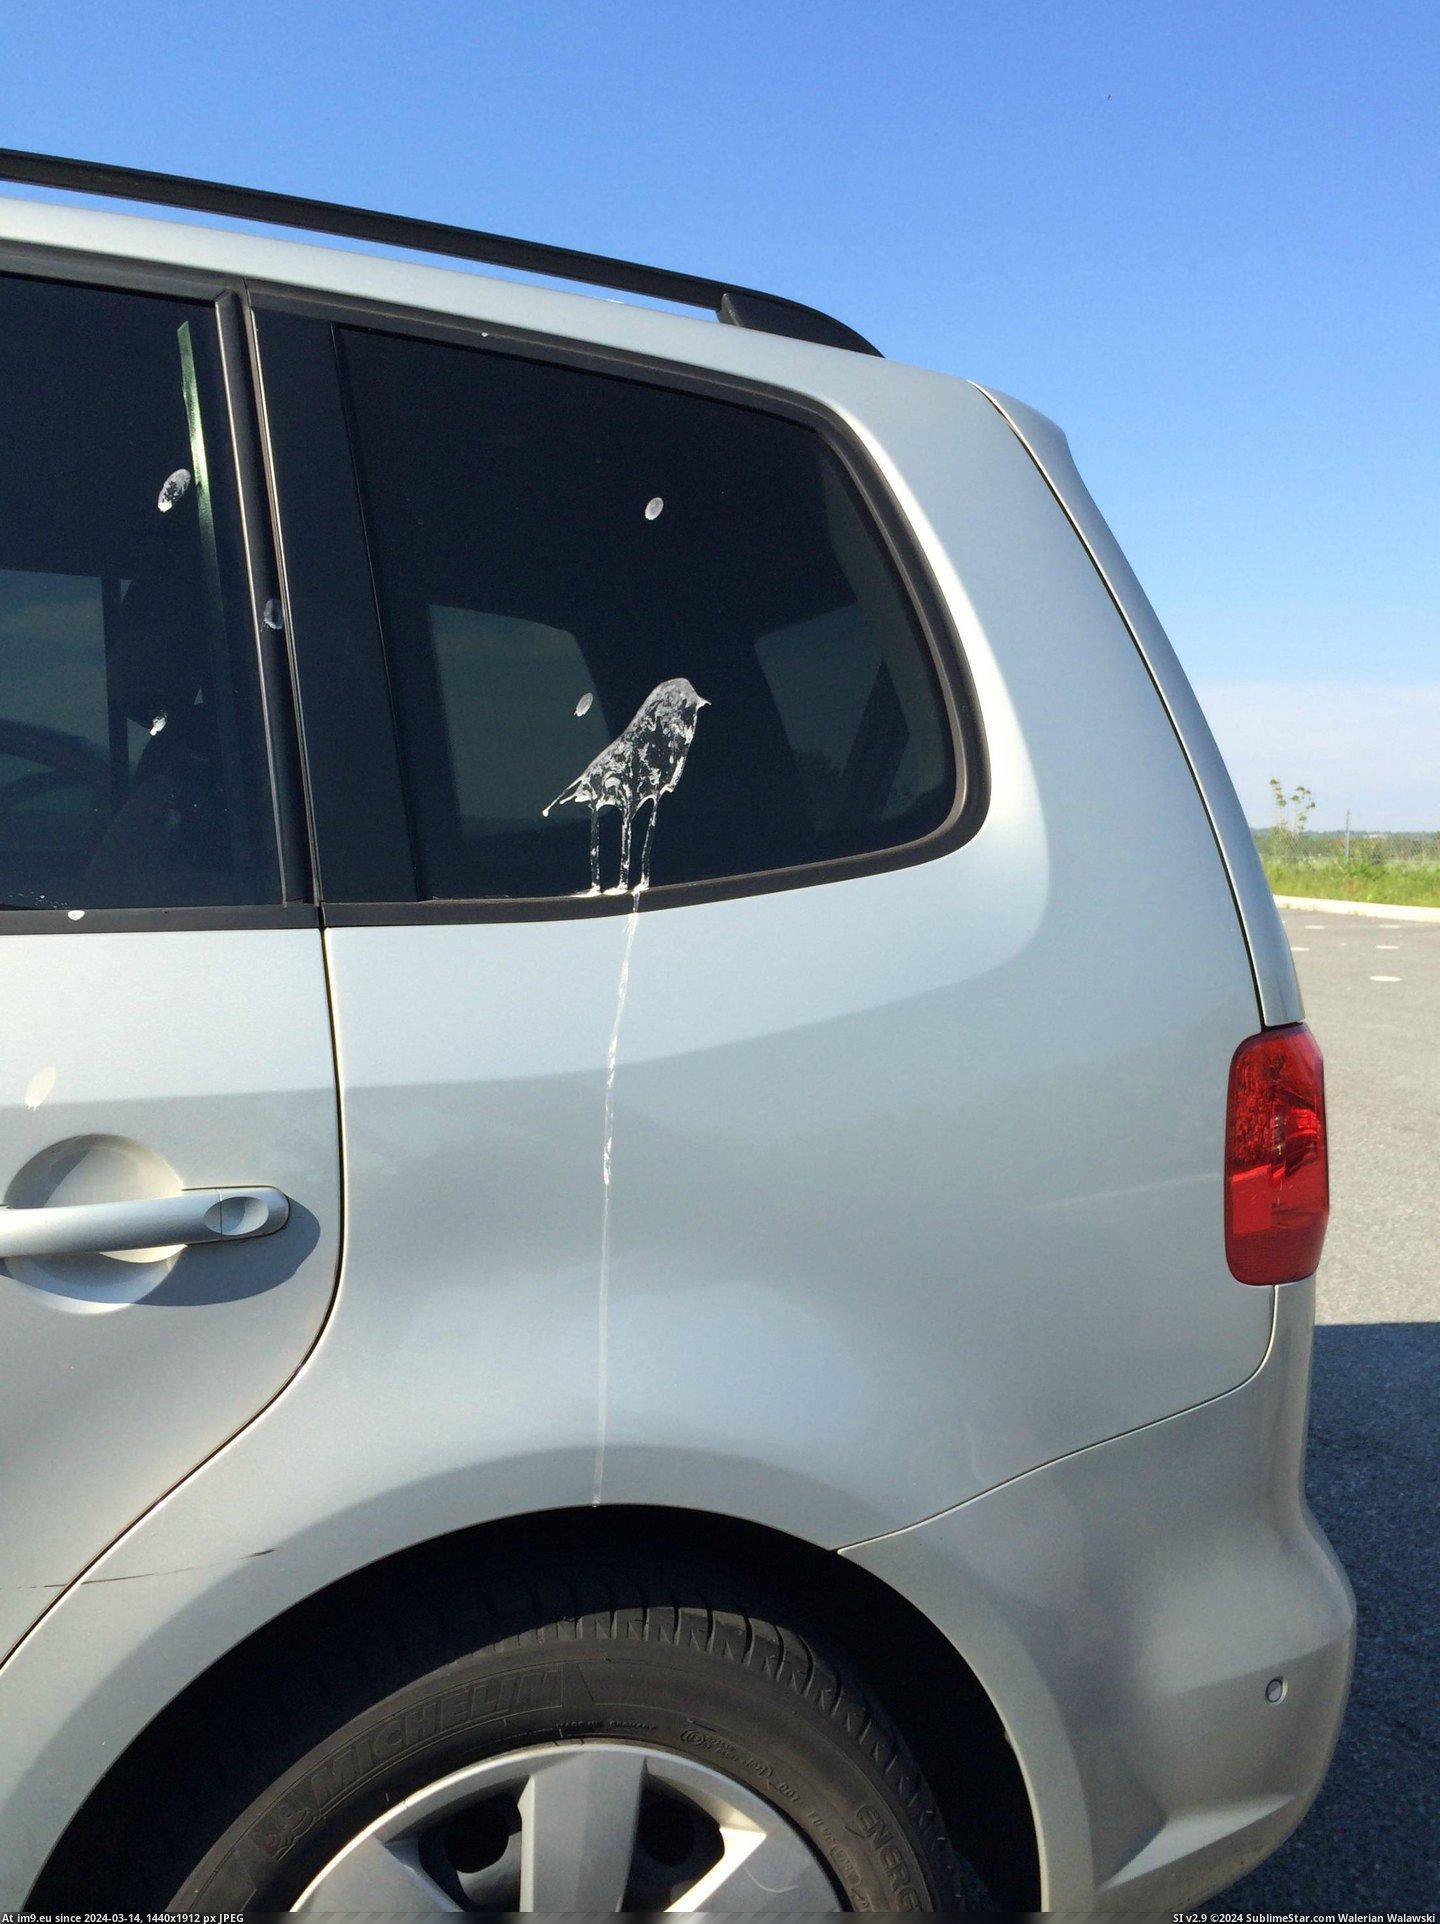 #Funny #Lot #Birdpoop #Parking #Masterpiece [Funny] Birdpoop masterpiece at the parking lot Pic. (Image of album My r/FUNNY favs))